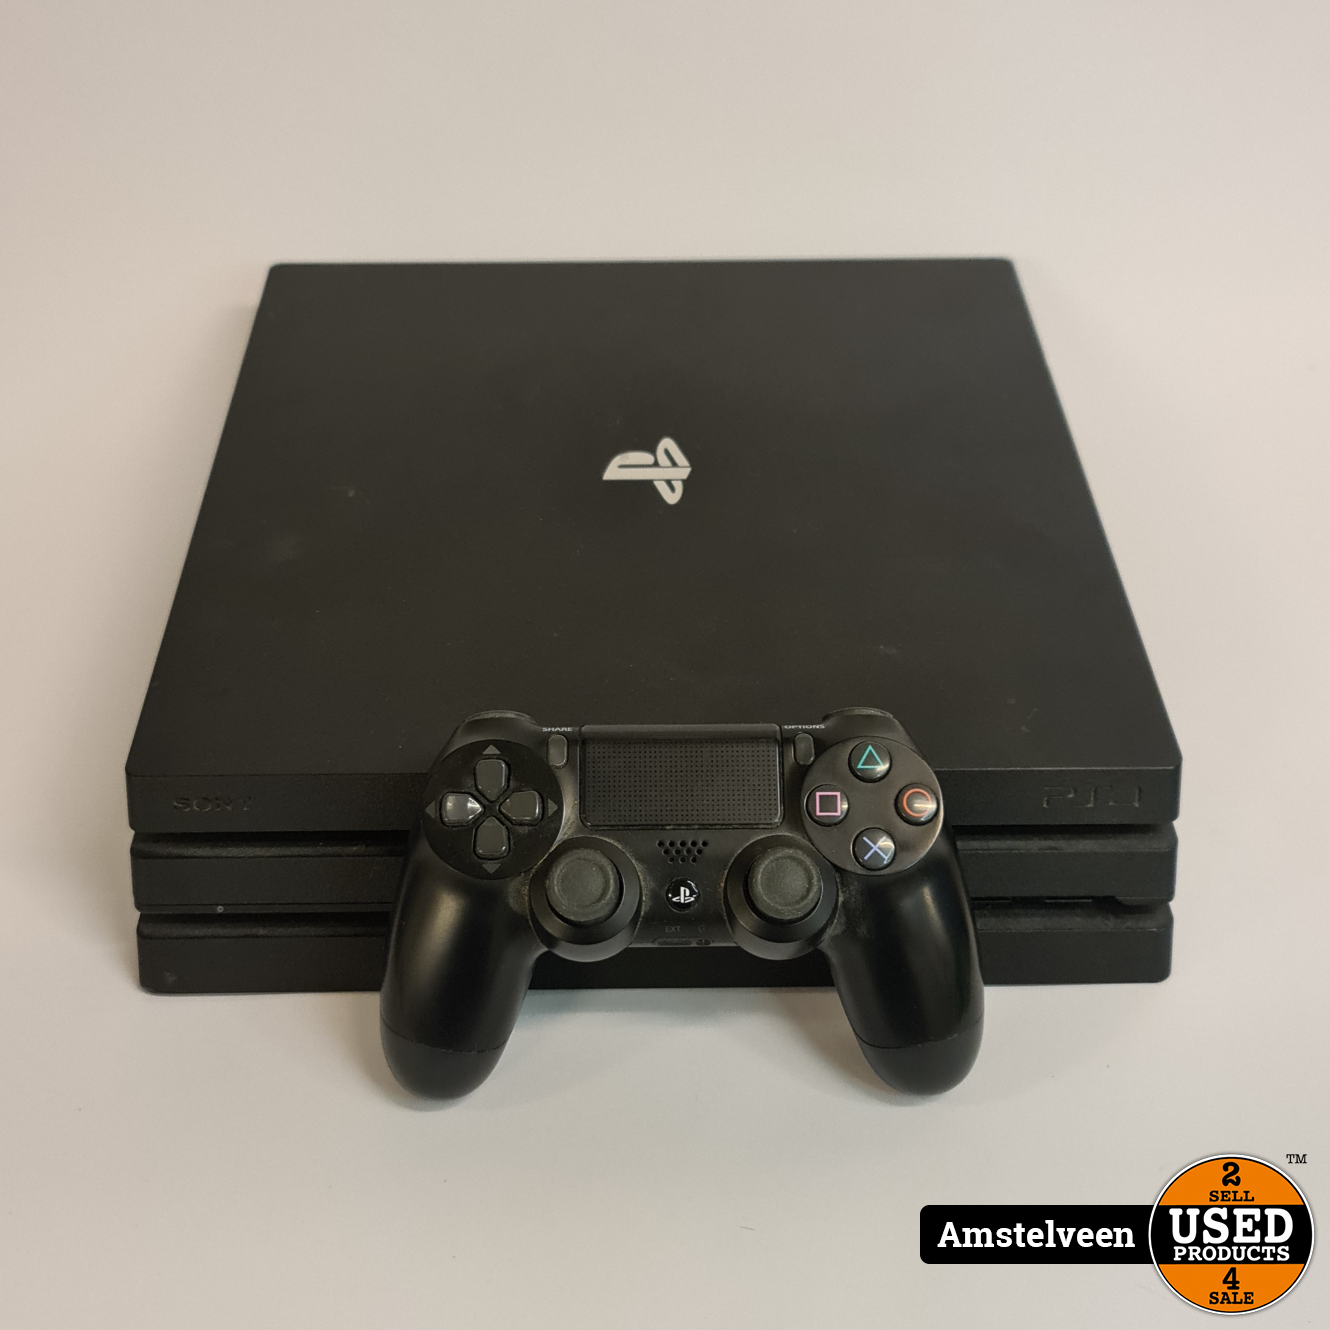 Klap Uitstroom Zeemeeuw Sony Playstation 4 Pro 1TB Black | Nette Staat - Used Products Amstelveen